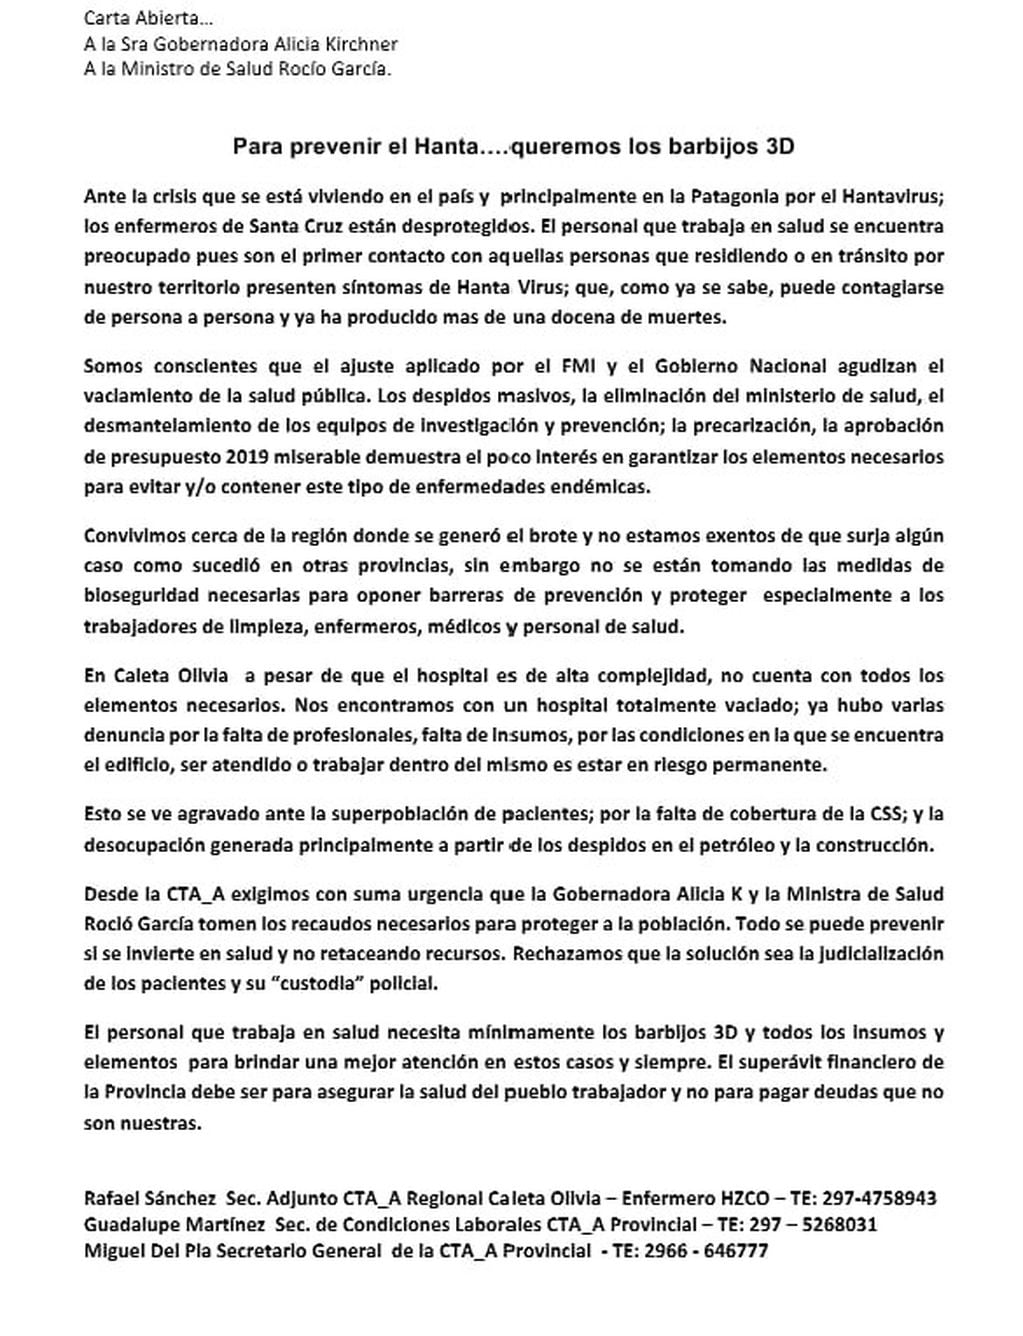 CTA-A dirigió Carta Abierta a Alicia Kirchner y Rocío García